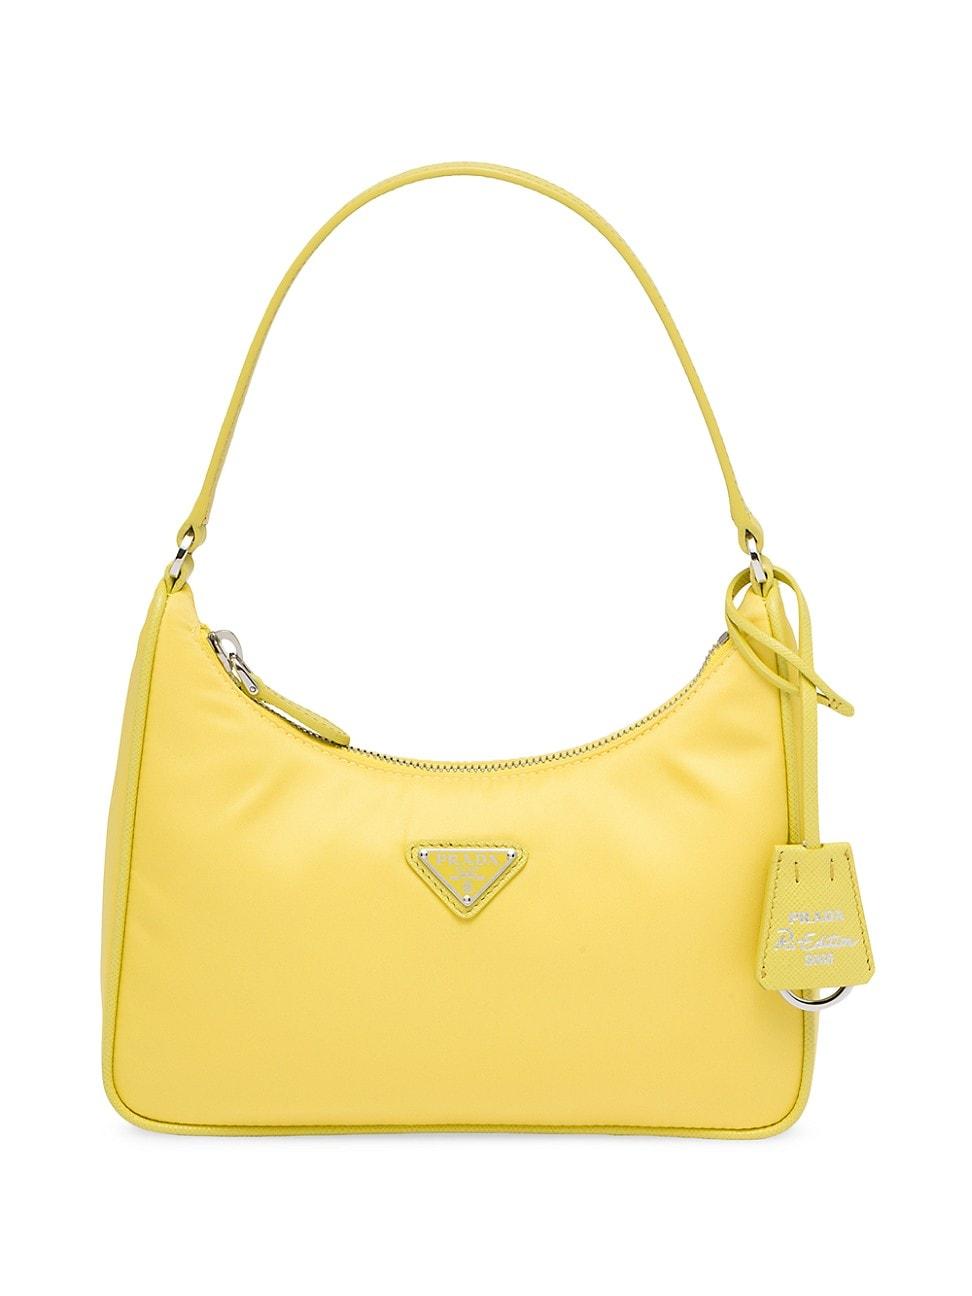 Prada Re-edition 2005 Re-nylon Mini Bag in Yellow